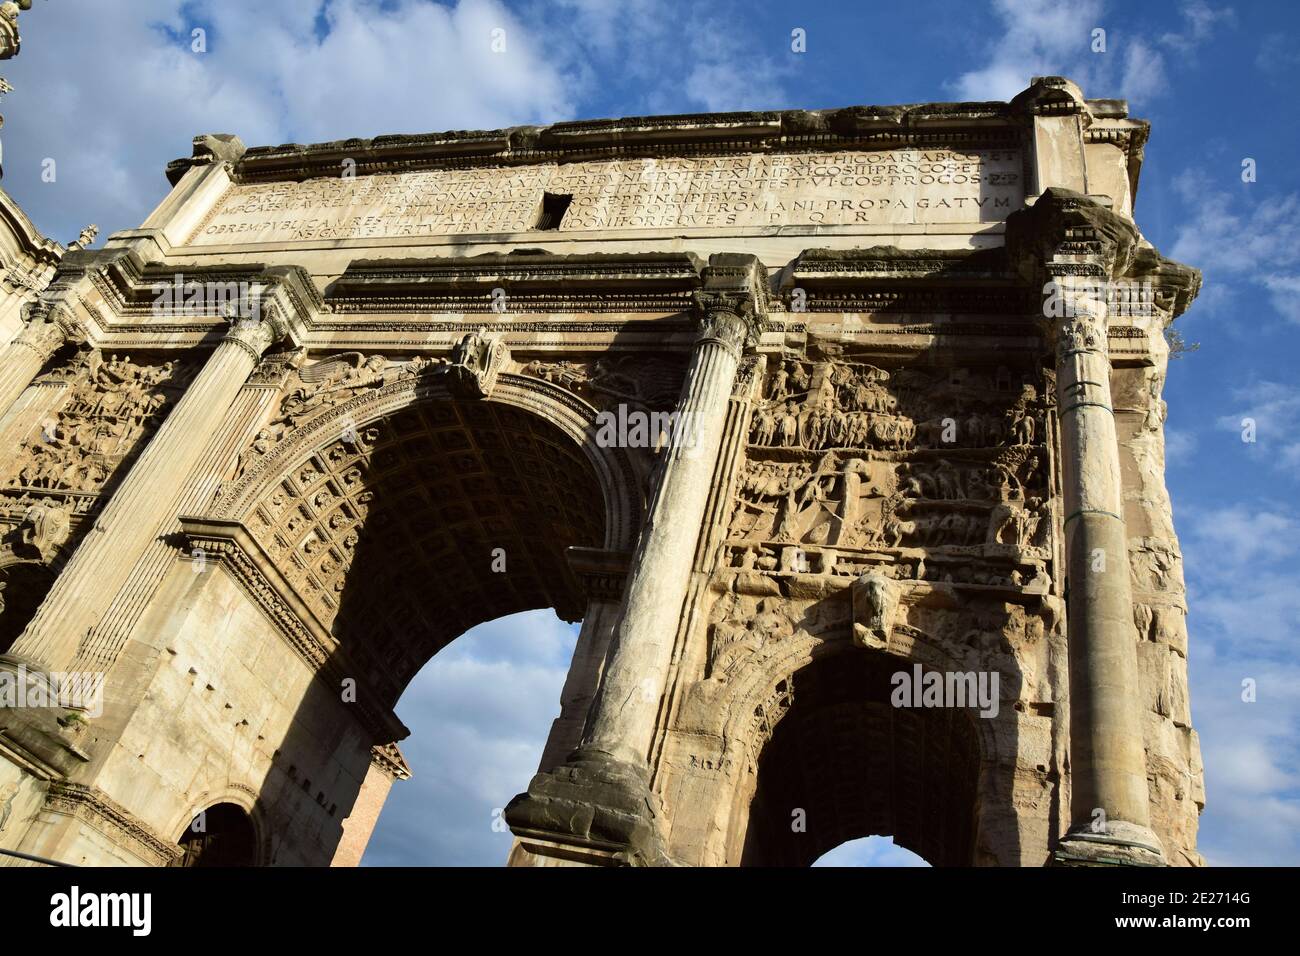 Arch of Septimius Severus - Roman Forum in Rome, Italy Stock Photo